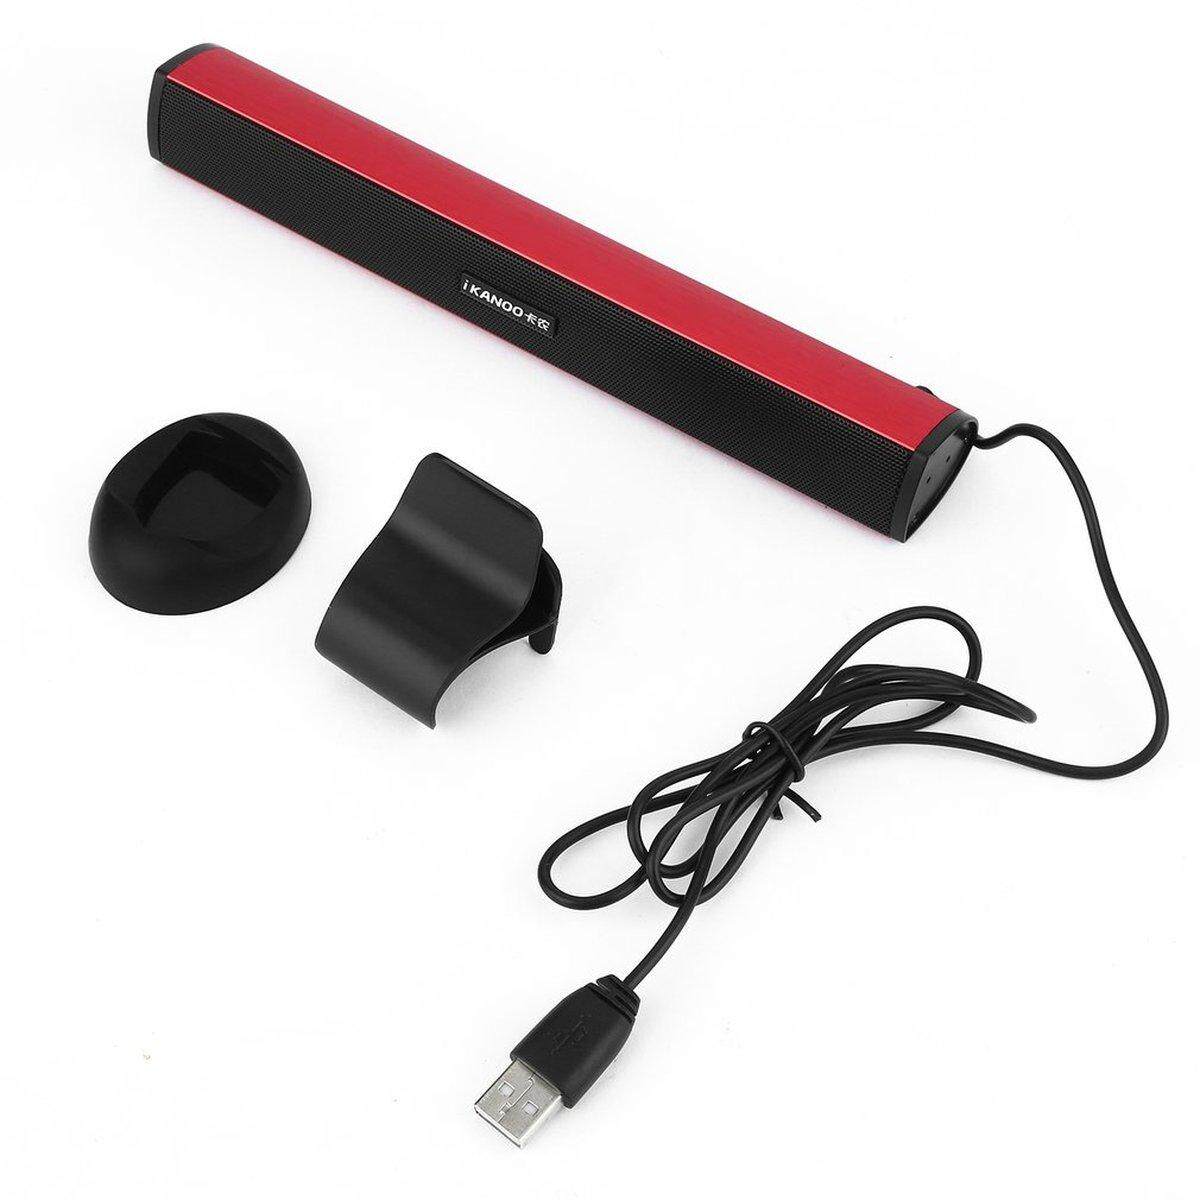 Hot Sale Ikanoo N12 Portable USB Powered Audio Speakers Amplifier Earphone Jack